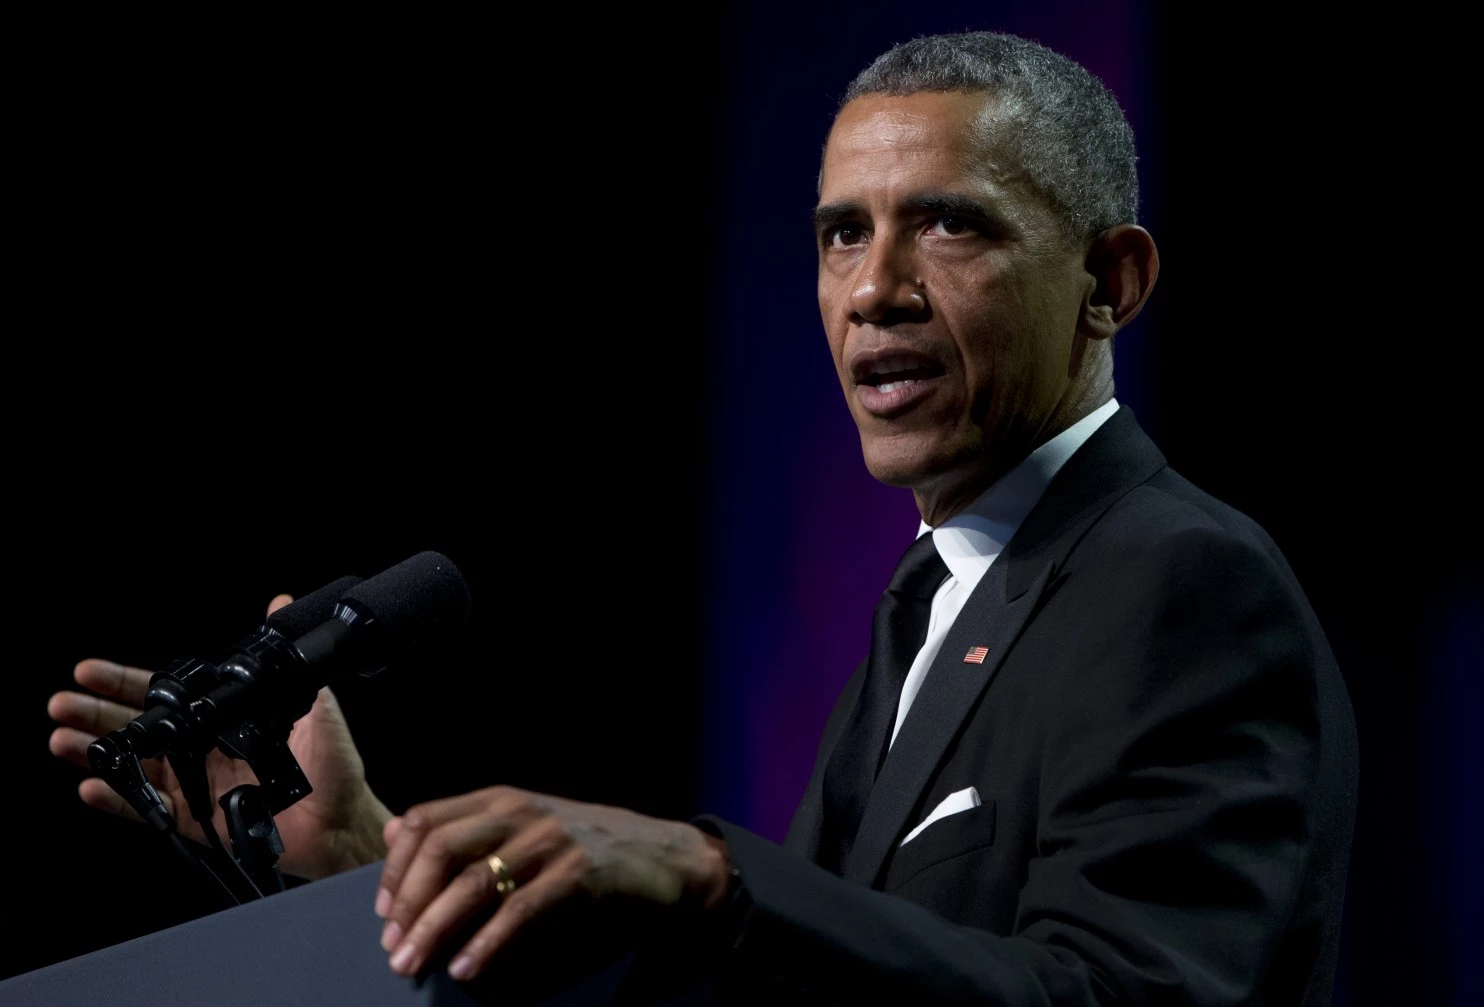 Emotional Obama unveils his plan to cut gun violence